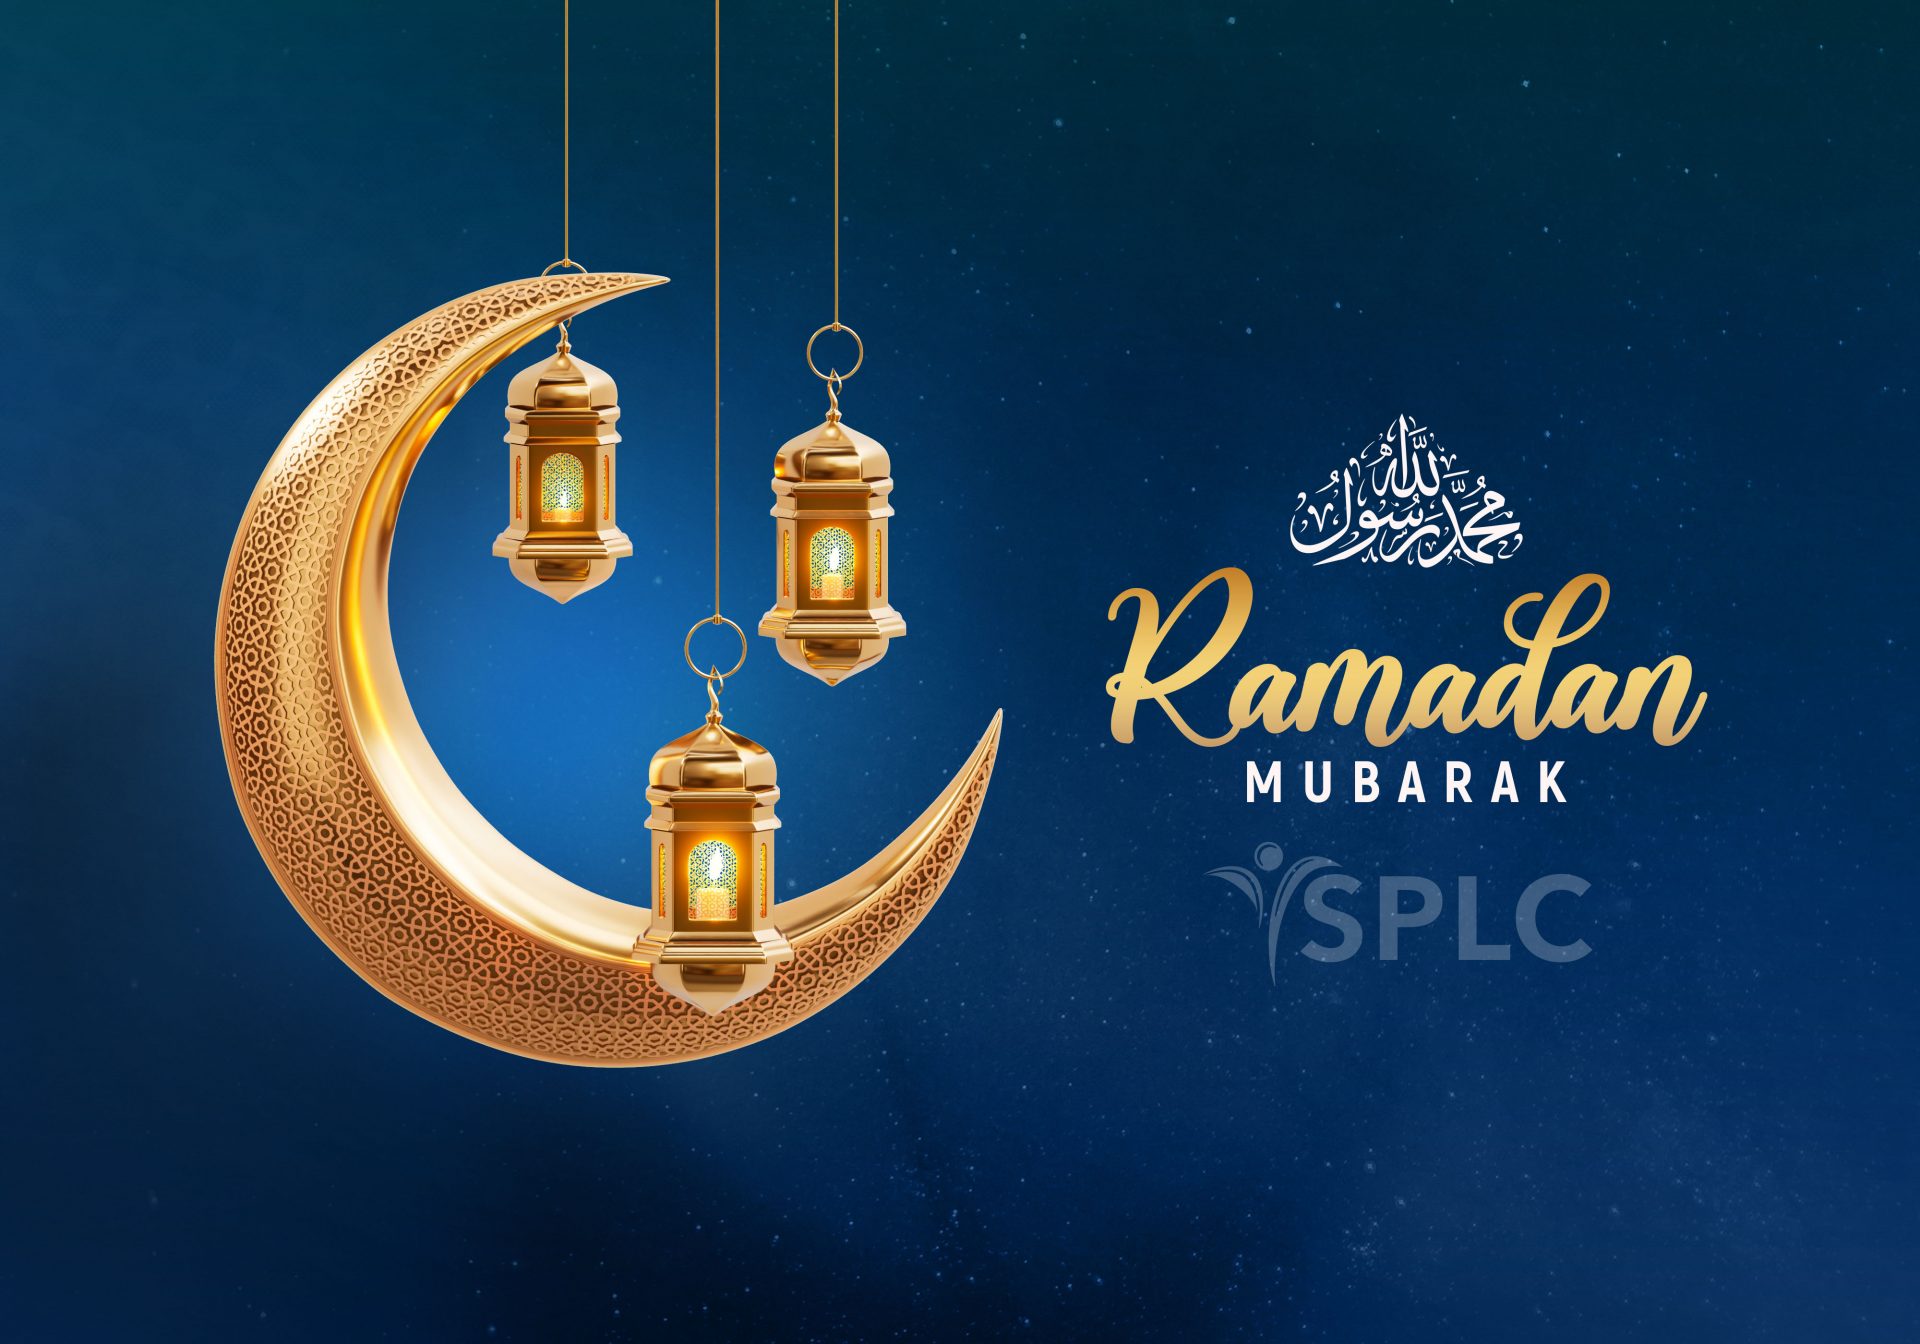 SPLC Ramadan Mubarak graphic